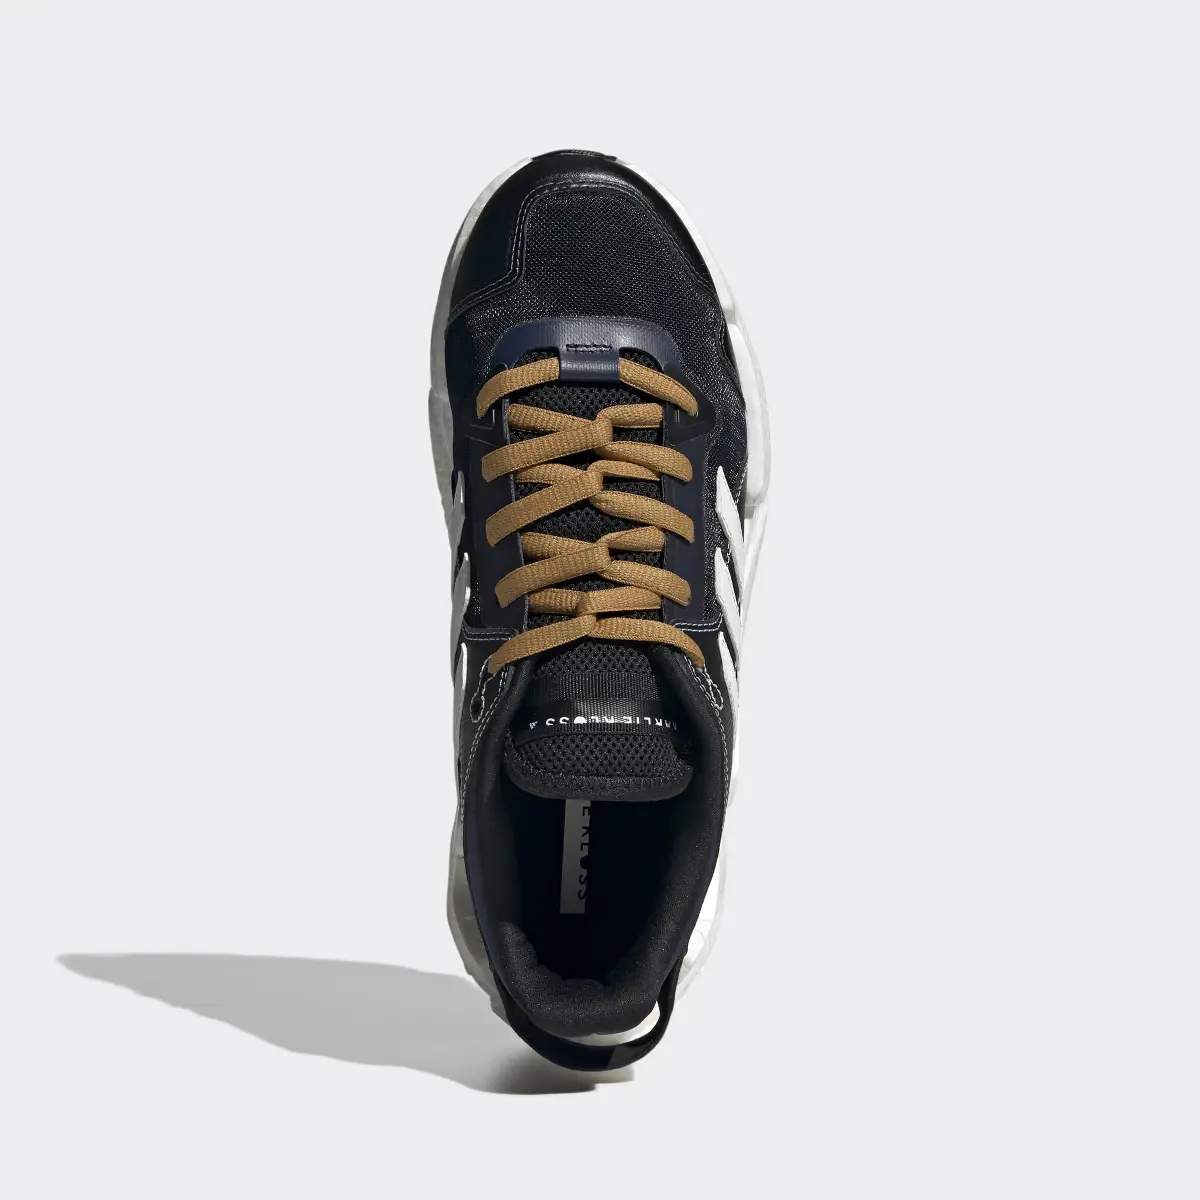 Adidas x Karlie Kloss X9000 Shoes. 3